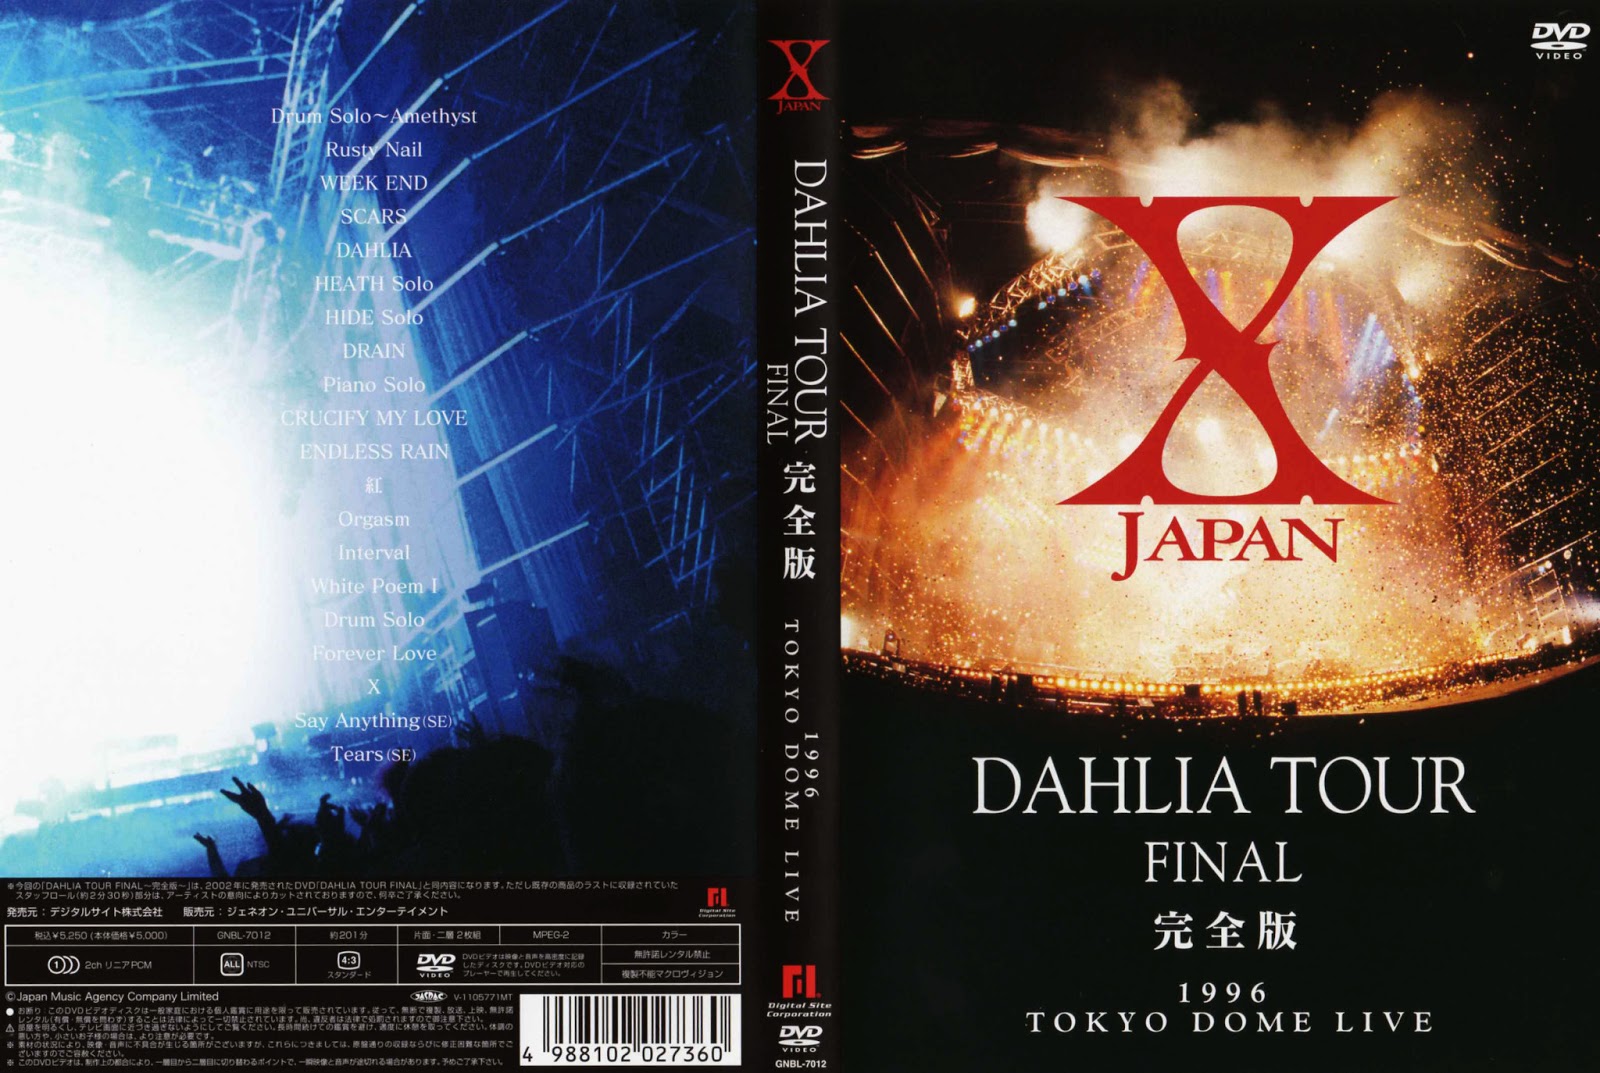 DAHLIA TOUR FINAL 完全版＋THE LAST LIVE 完全版の+spbgp44.ru